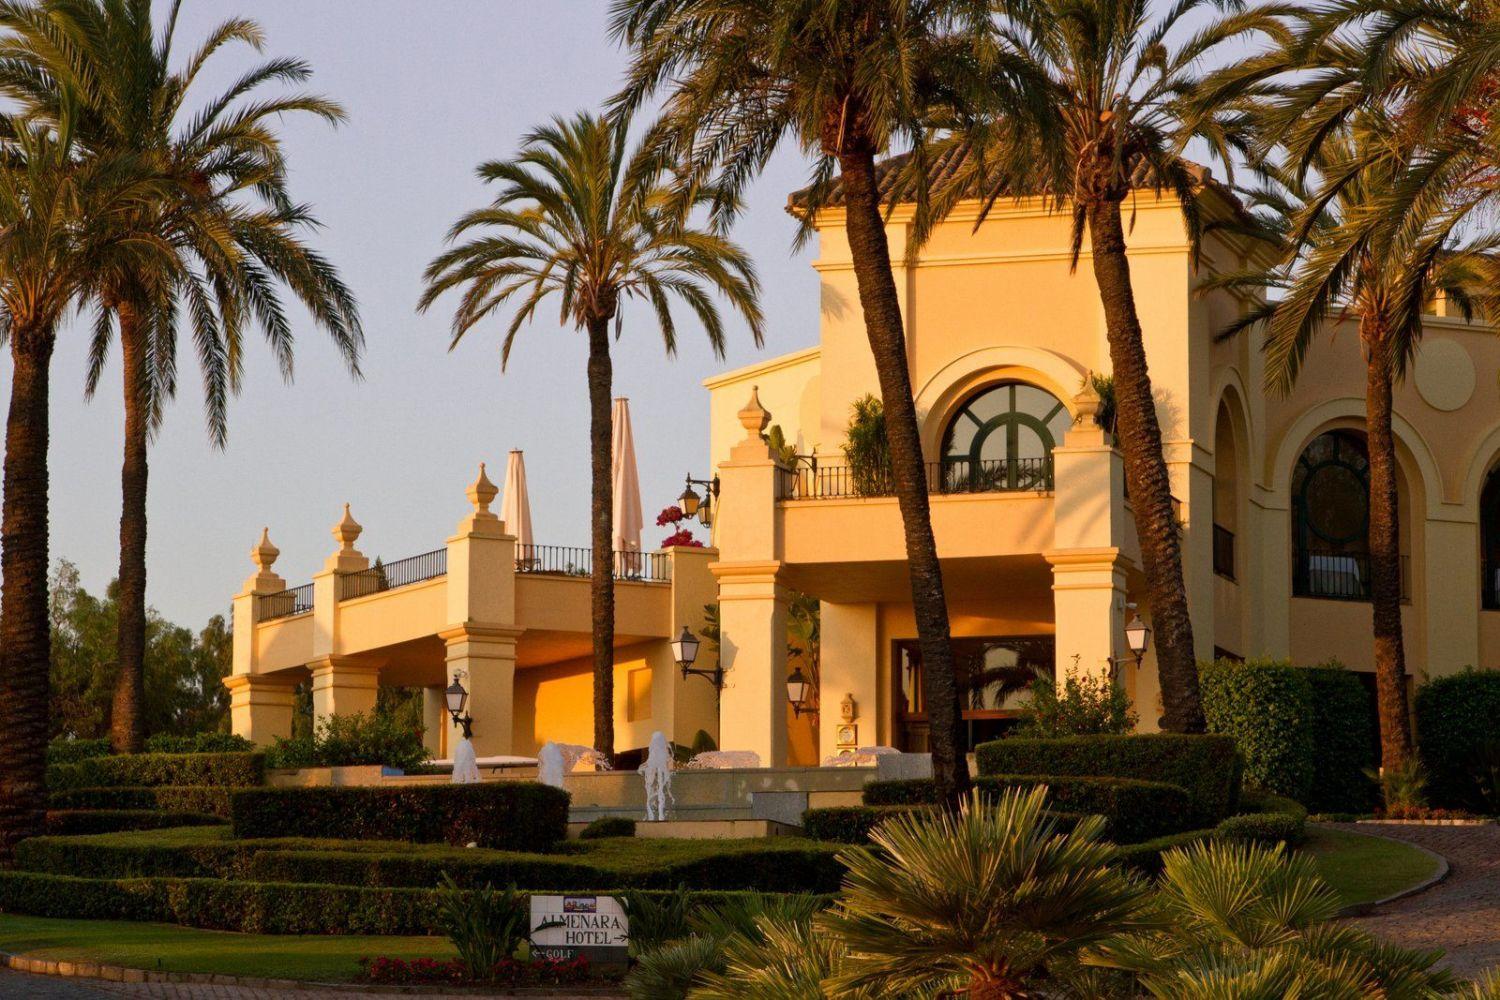 Hotel Almenara Golf & Spa